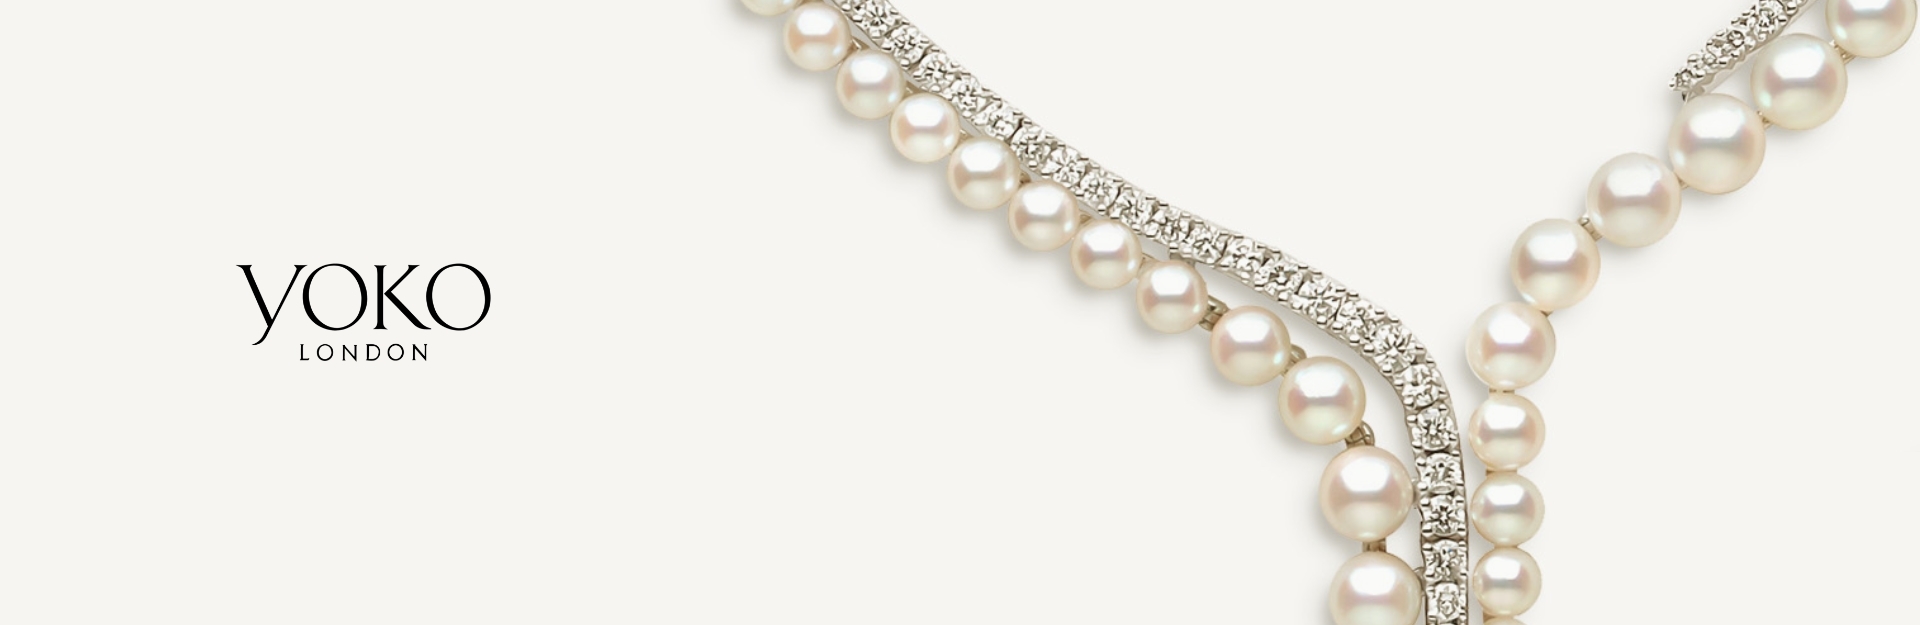 Yoko London logo with pearl strand and diamond tennis strand necklace